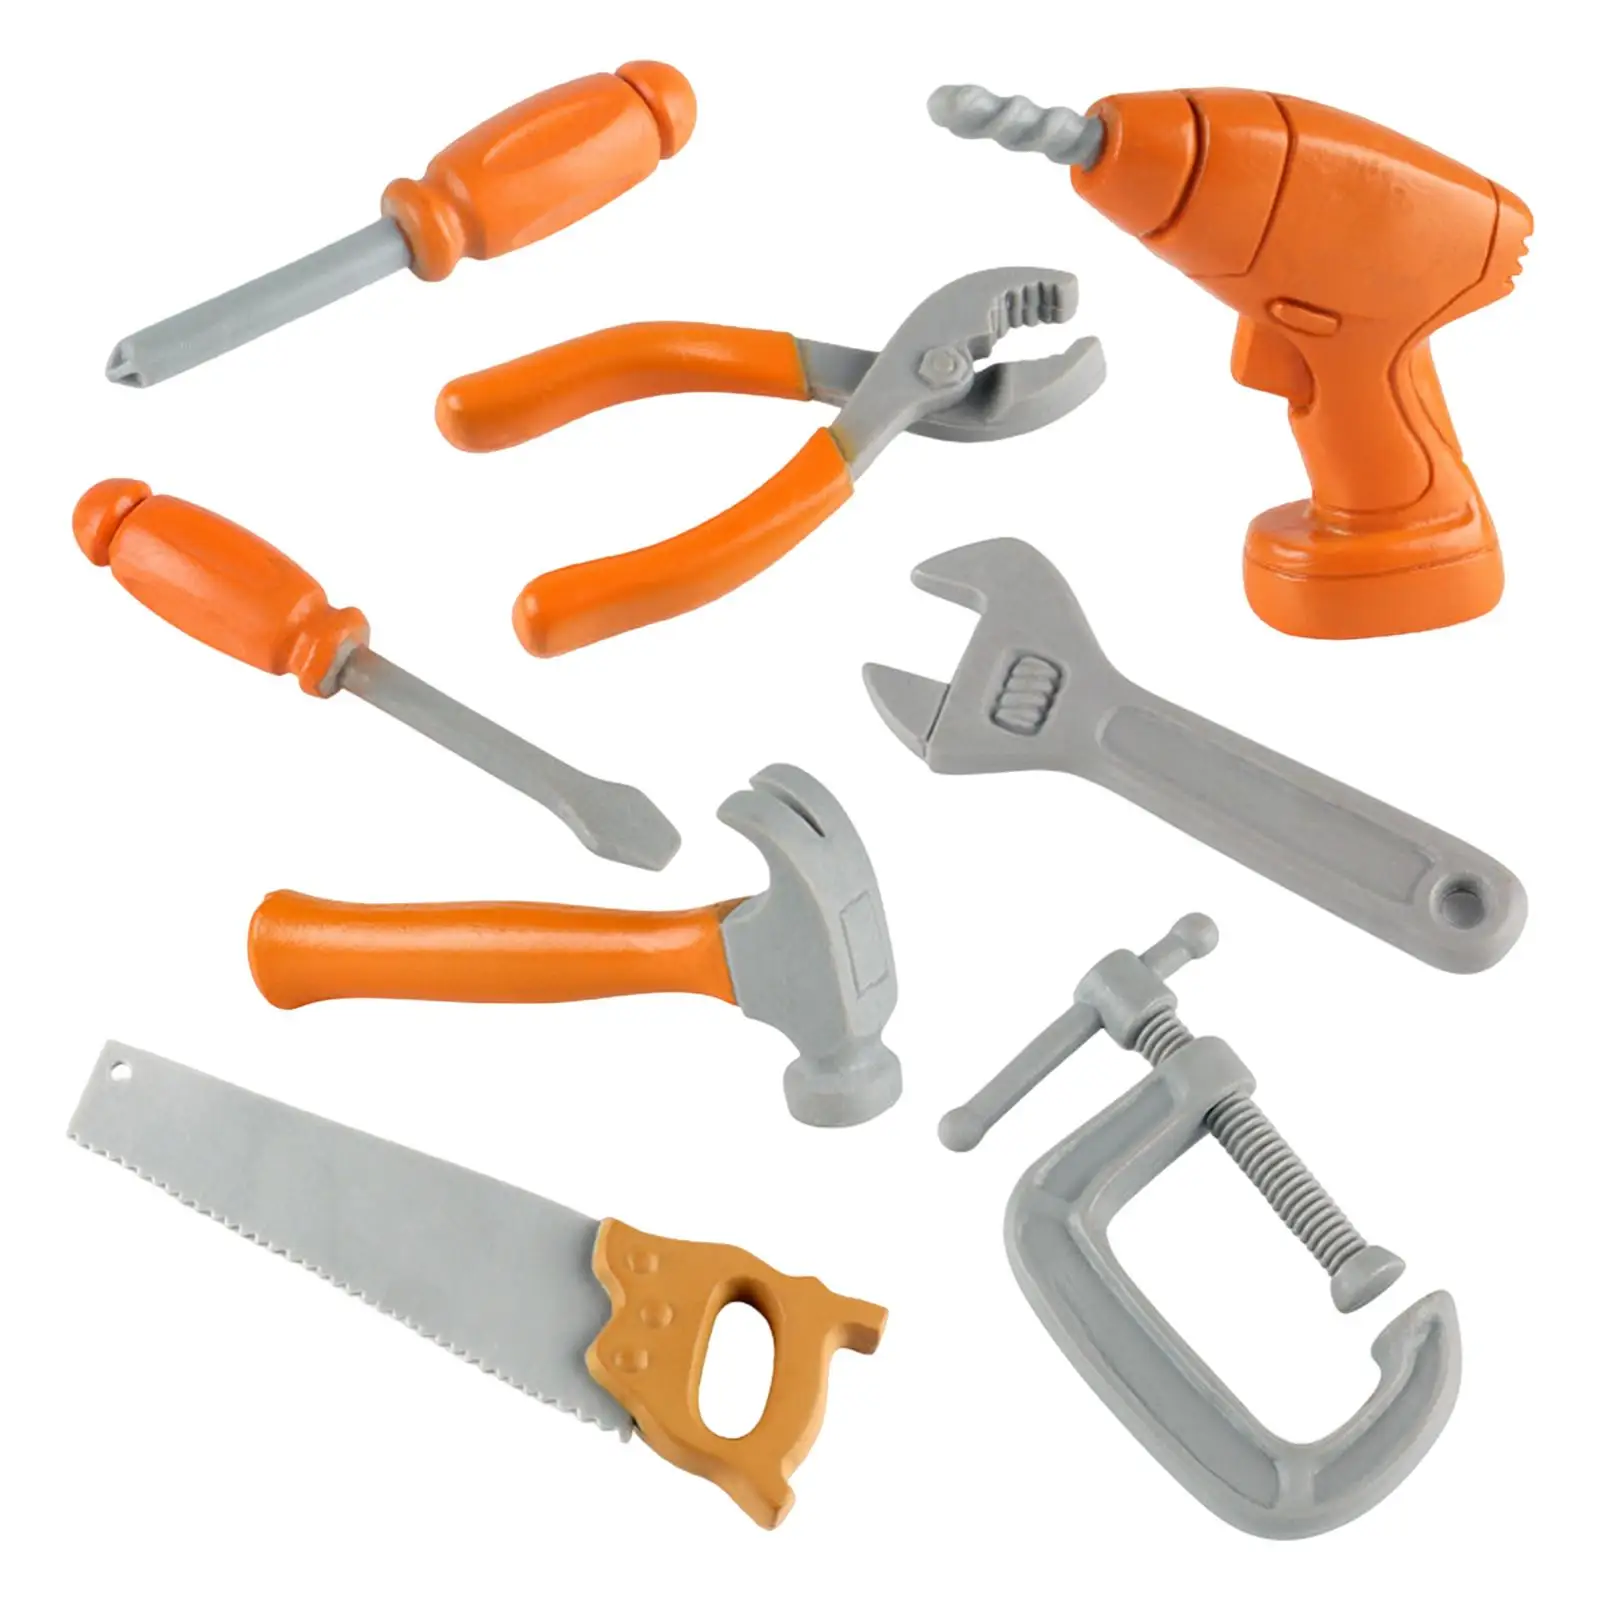 8Pcs Workshop Toy Tools Set, Construction Hand Tool, Kids Play Tool Set Pretend Play Accessory